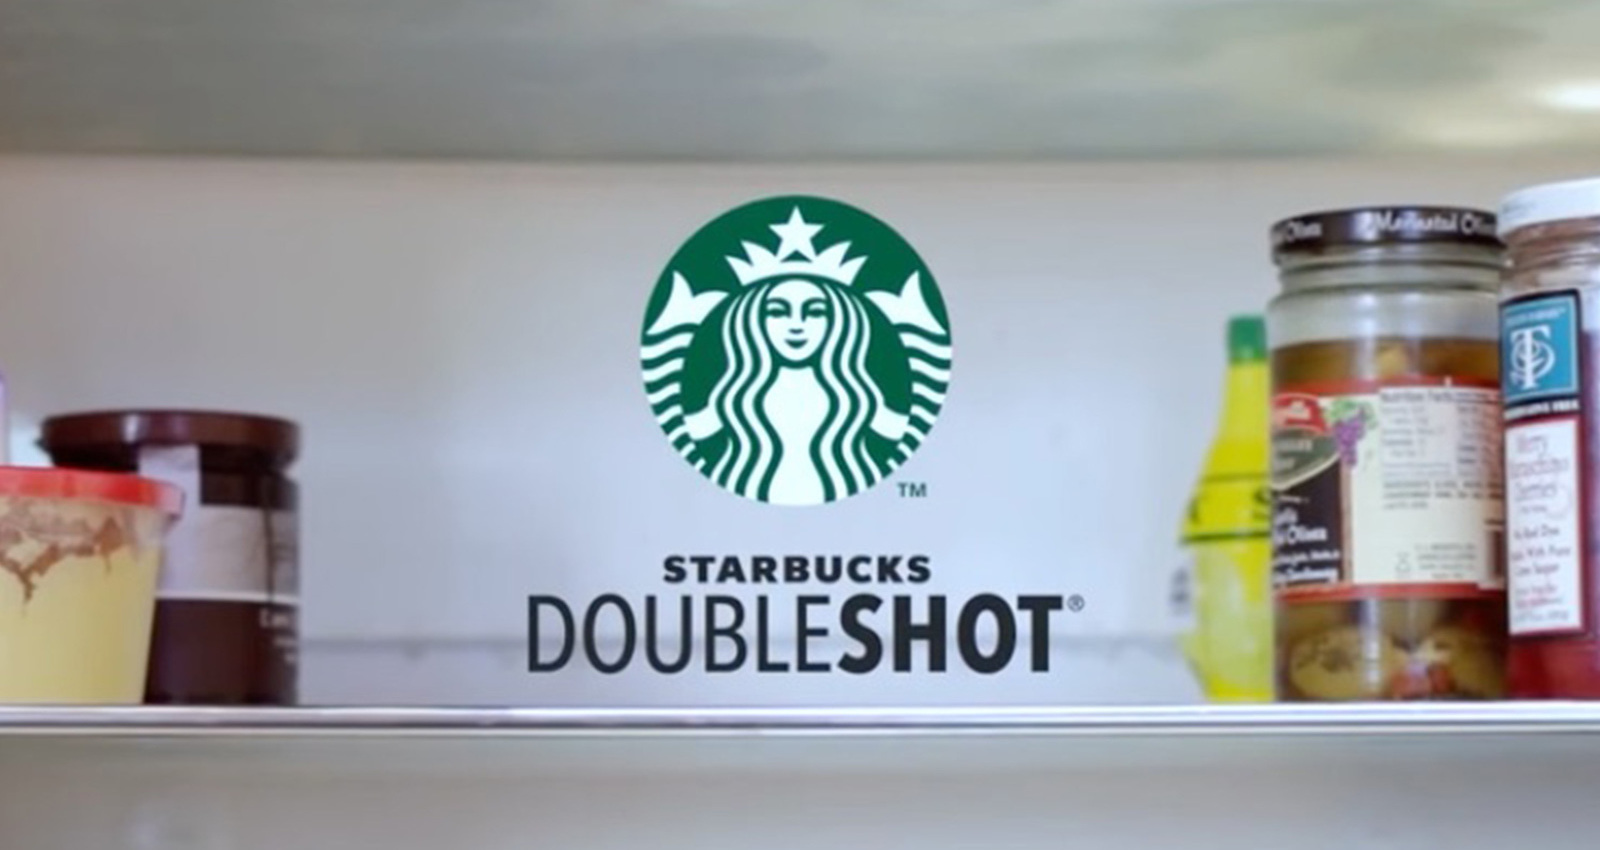 Starbucks Doubleshot Presents: Uploaded